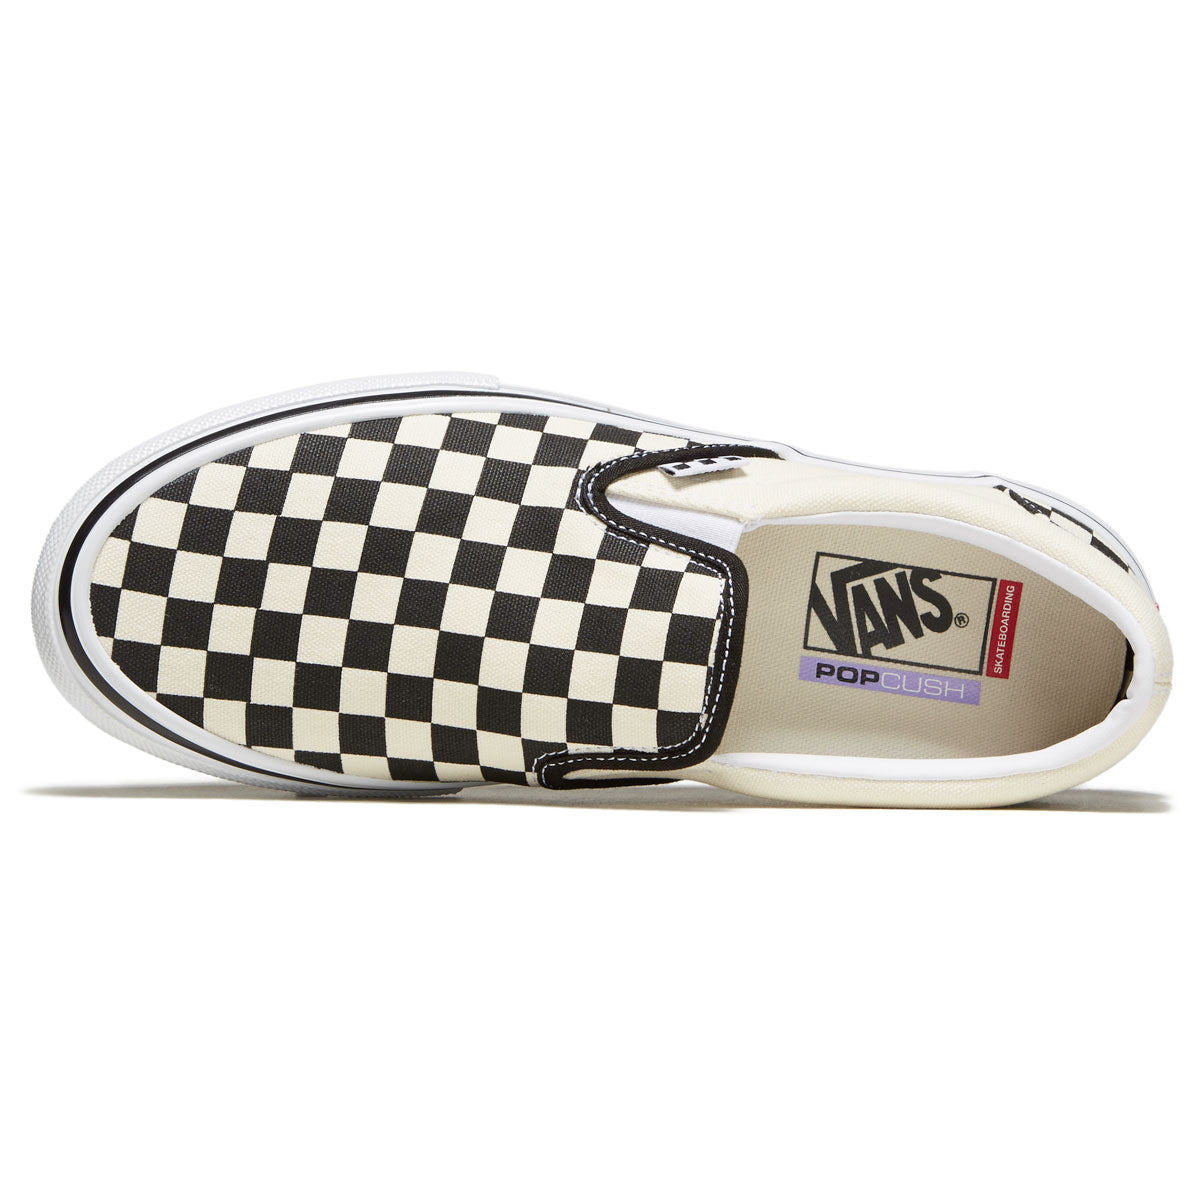 Vans Skate Slip-on Shoes - Checkerboard Black/Off White image 3